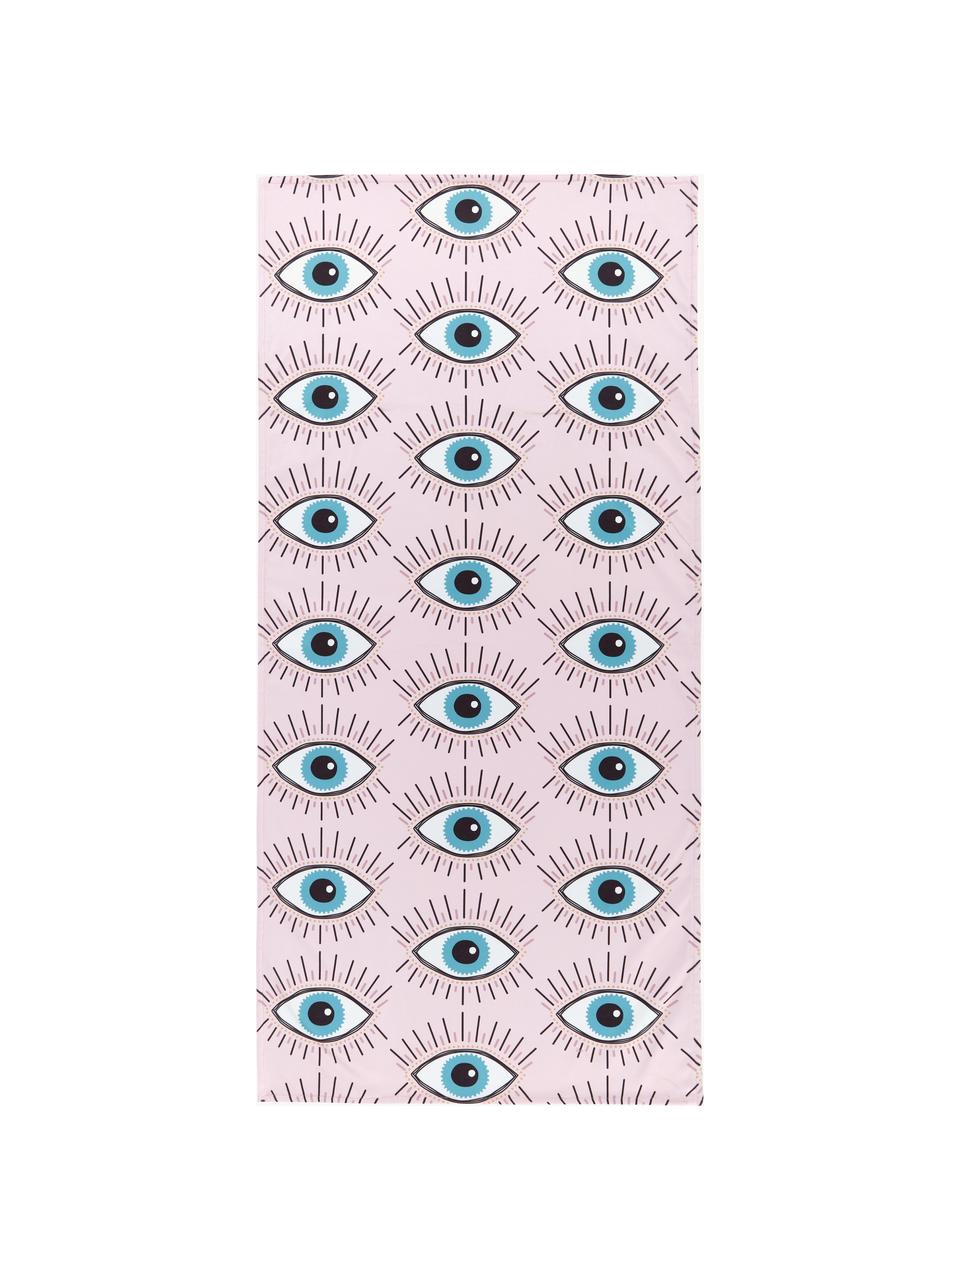 Licht strandlaken Eyes met oogmotieven, 55% polyester, 45% katoen zeer lichte kwaliteit, 340 g/m², Roze, multicolour, B 70 x L 150 cm